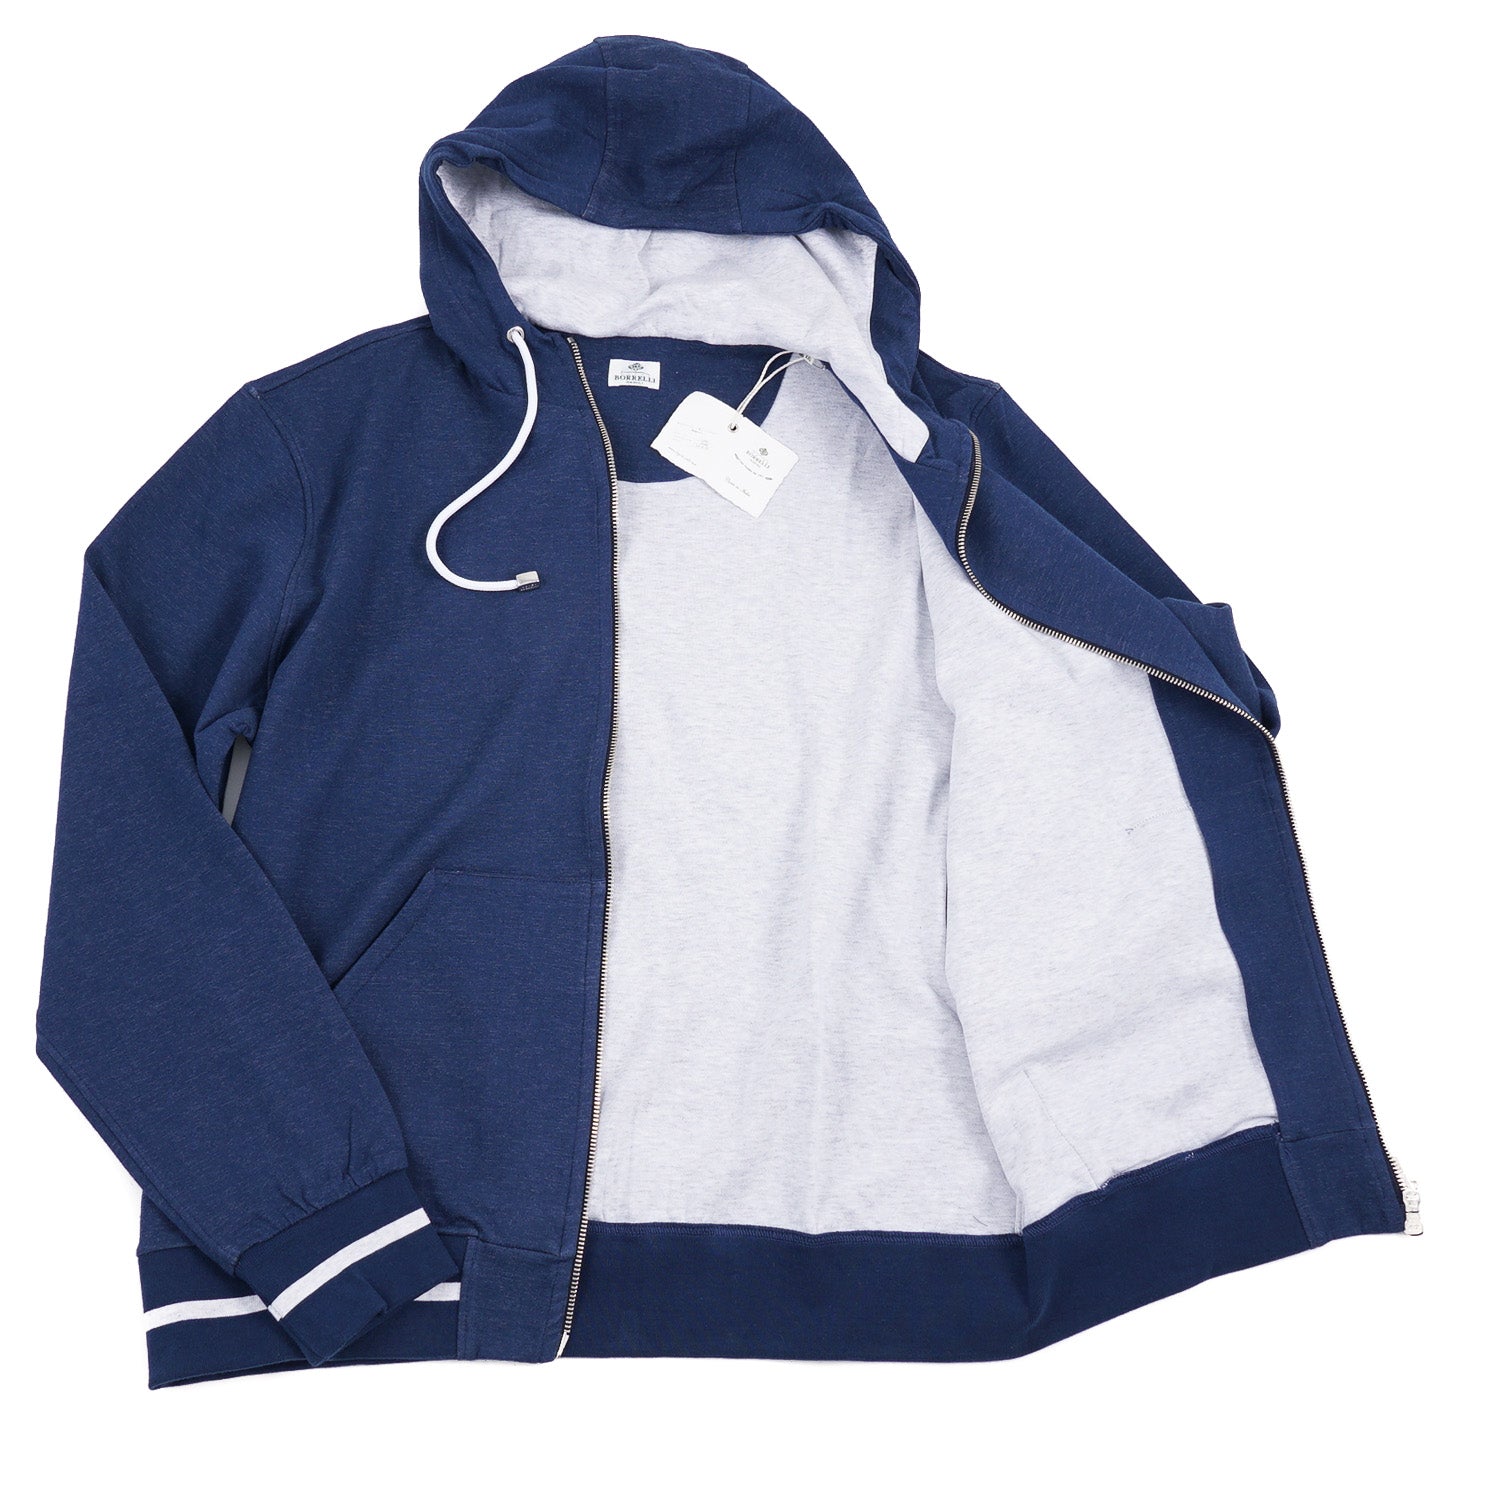 Borrelli Slim-Fit Hooded Sweatshirt - Top Shelf Apparel